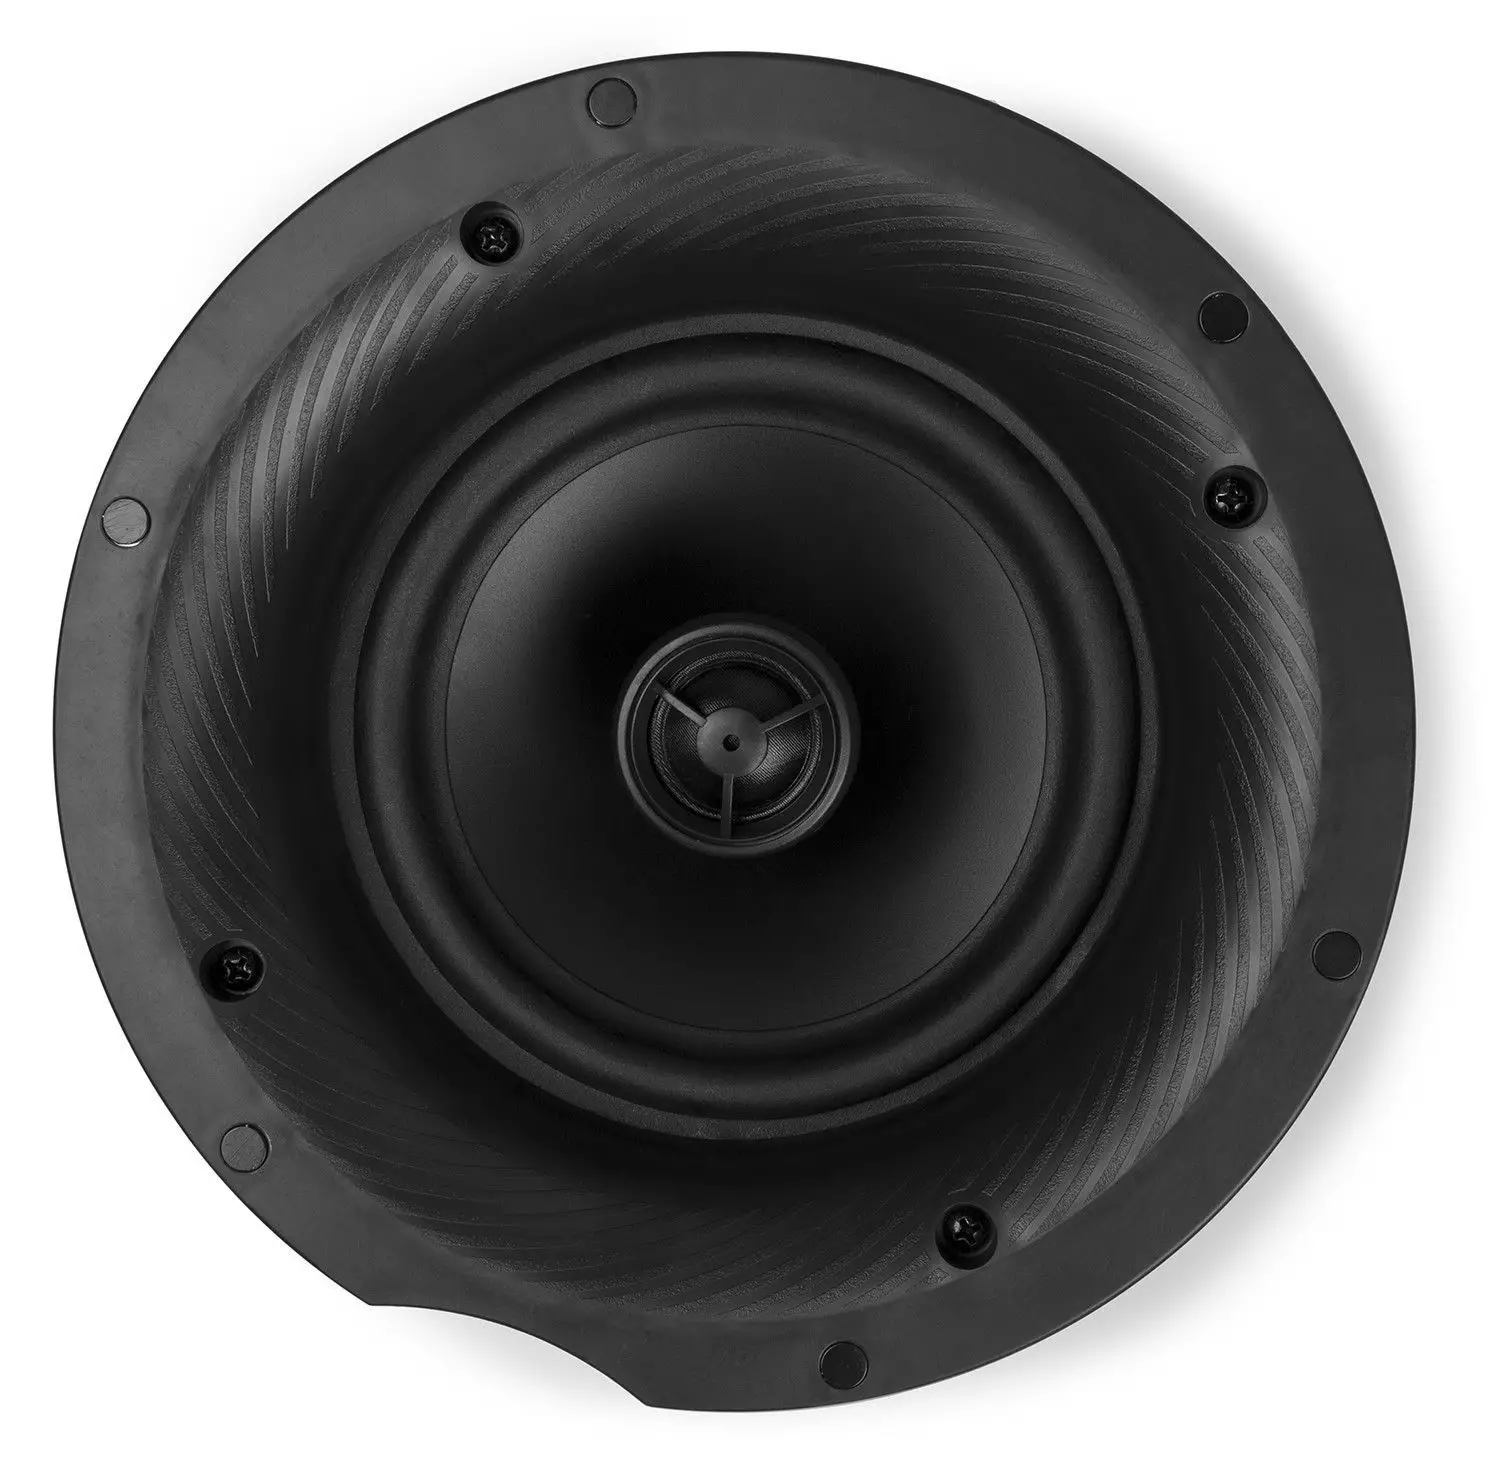 Power dynamics wit retourdeals installatie speakers|hifi luidsprekers|100 volt speakers|installatie speakers